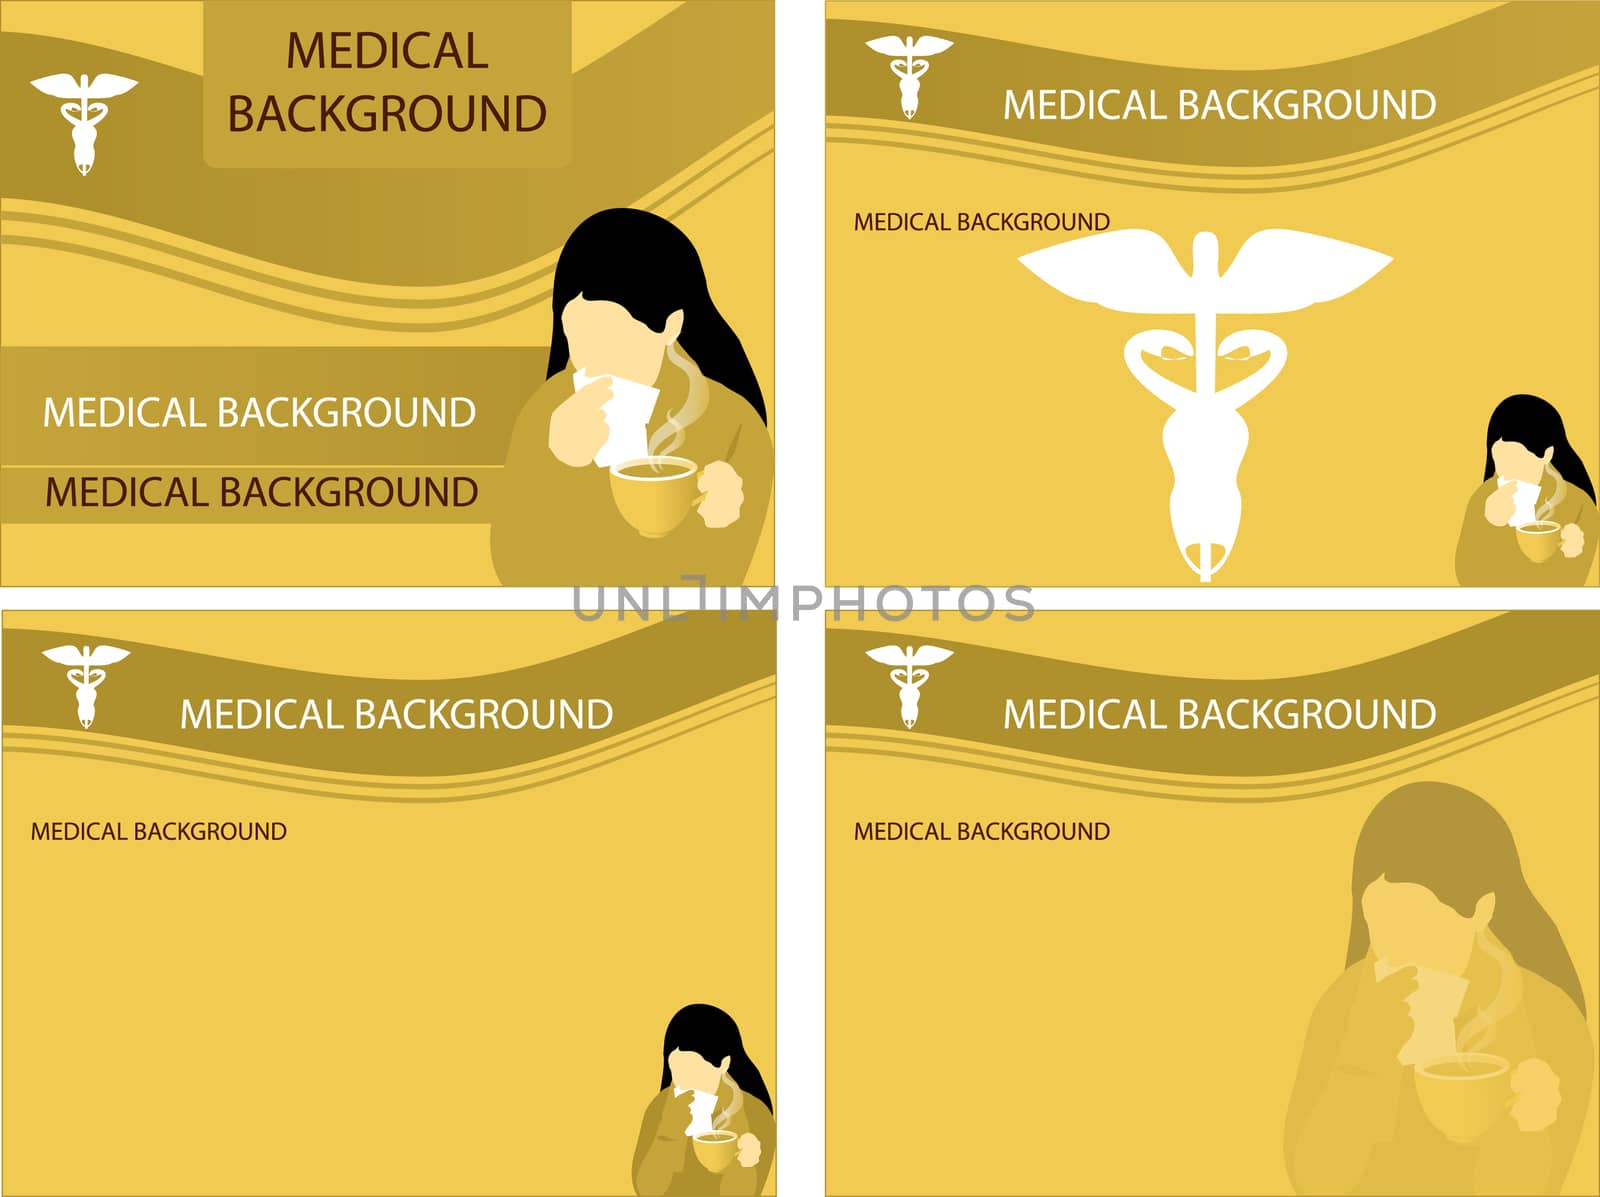 4 Medical backgrounds, cold & cough, illness, Preventive maintenance, treatment